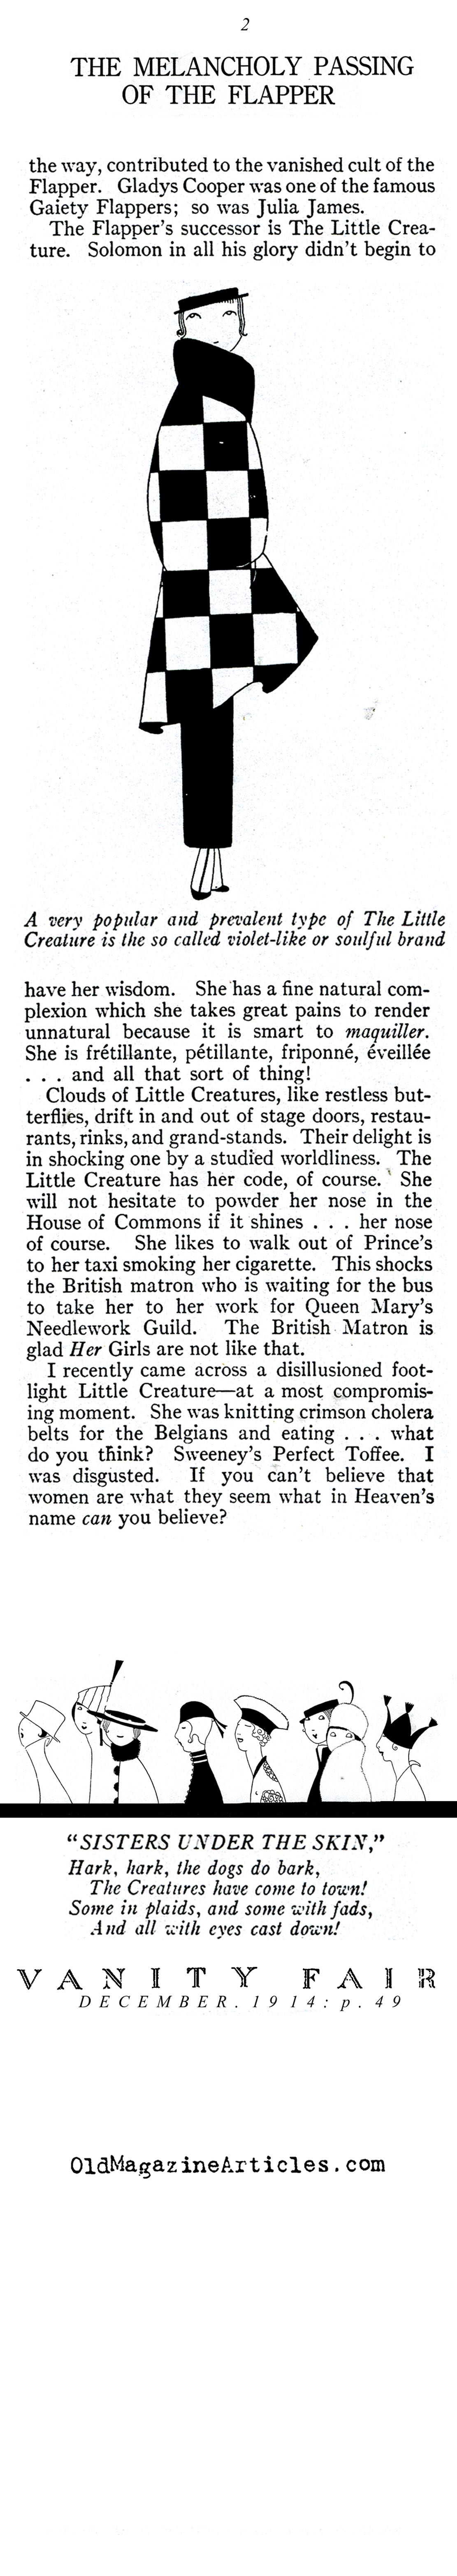 British Flappers (Vanity Fair Magazine, 1914)